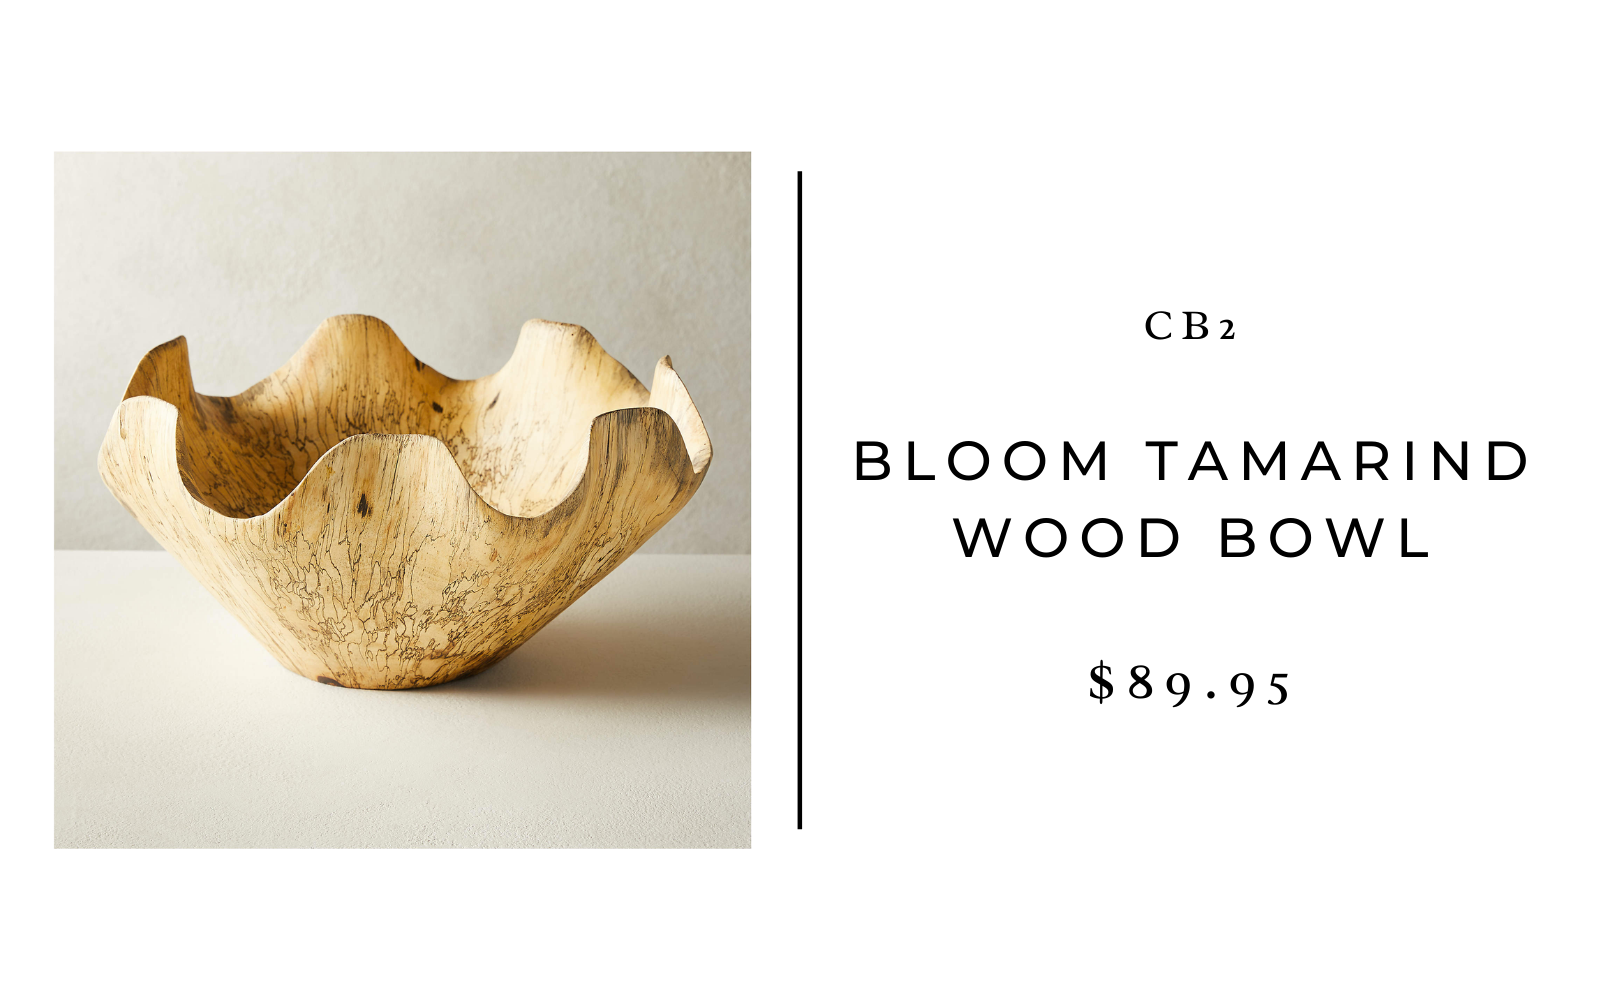 CB2 Bloom Tamarind Wood Bowl